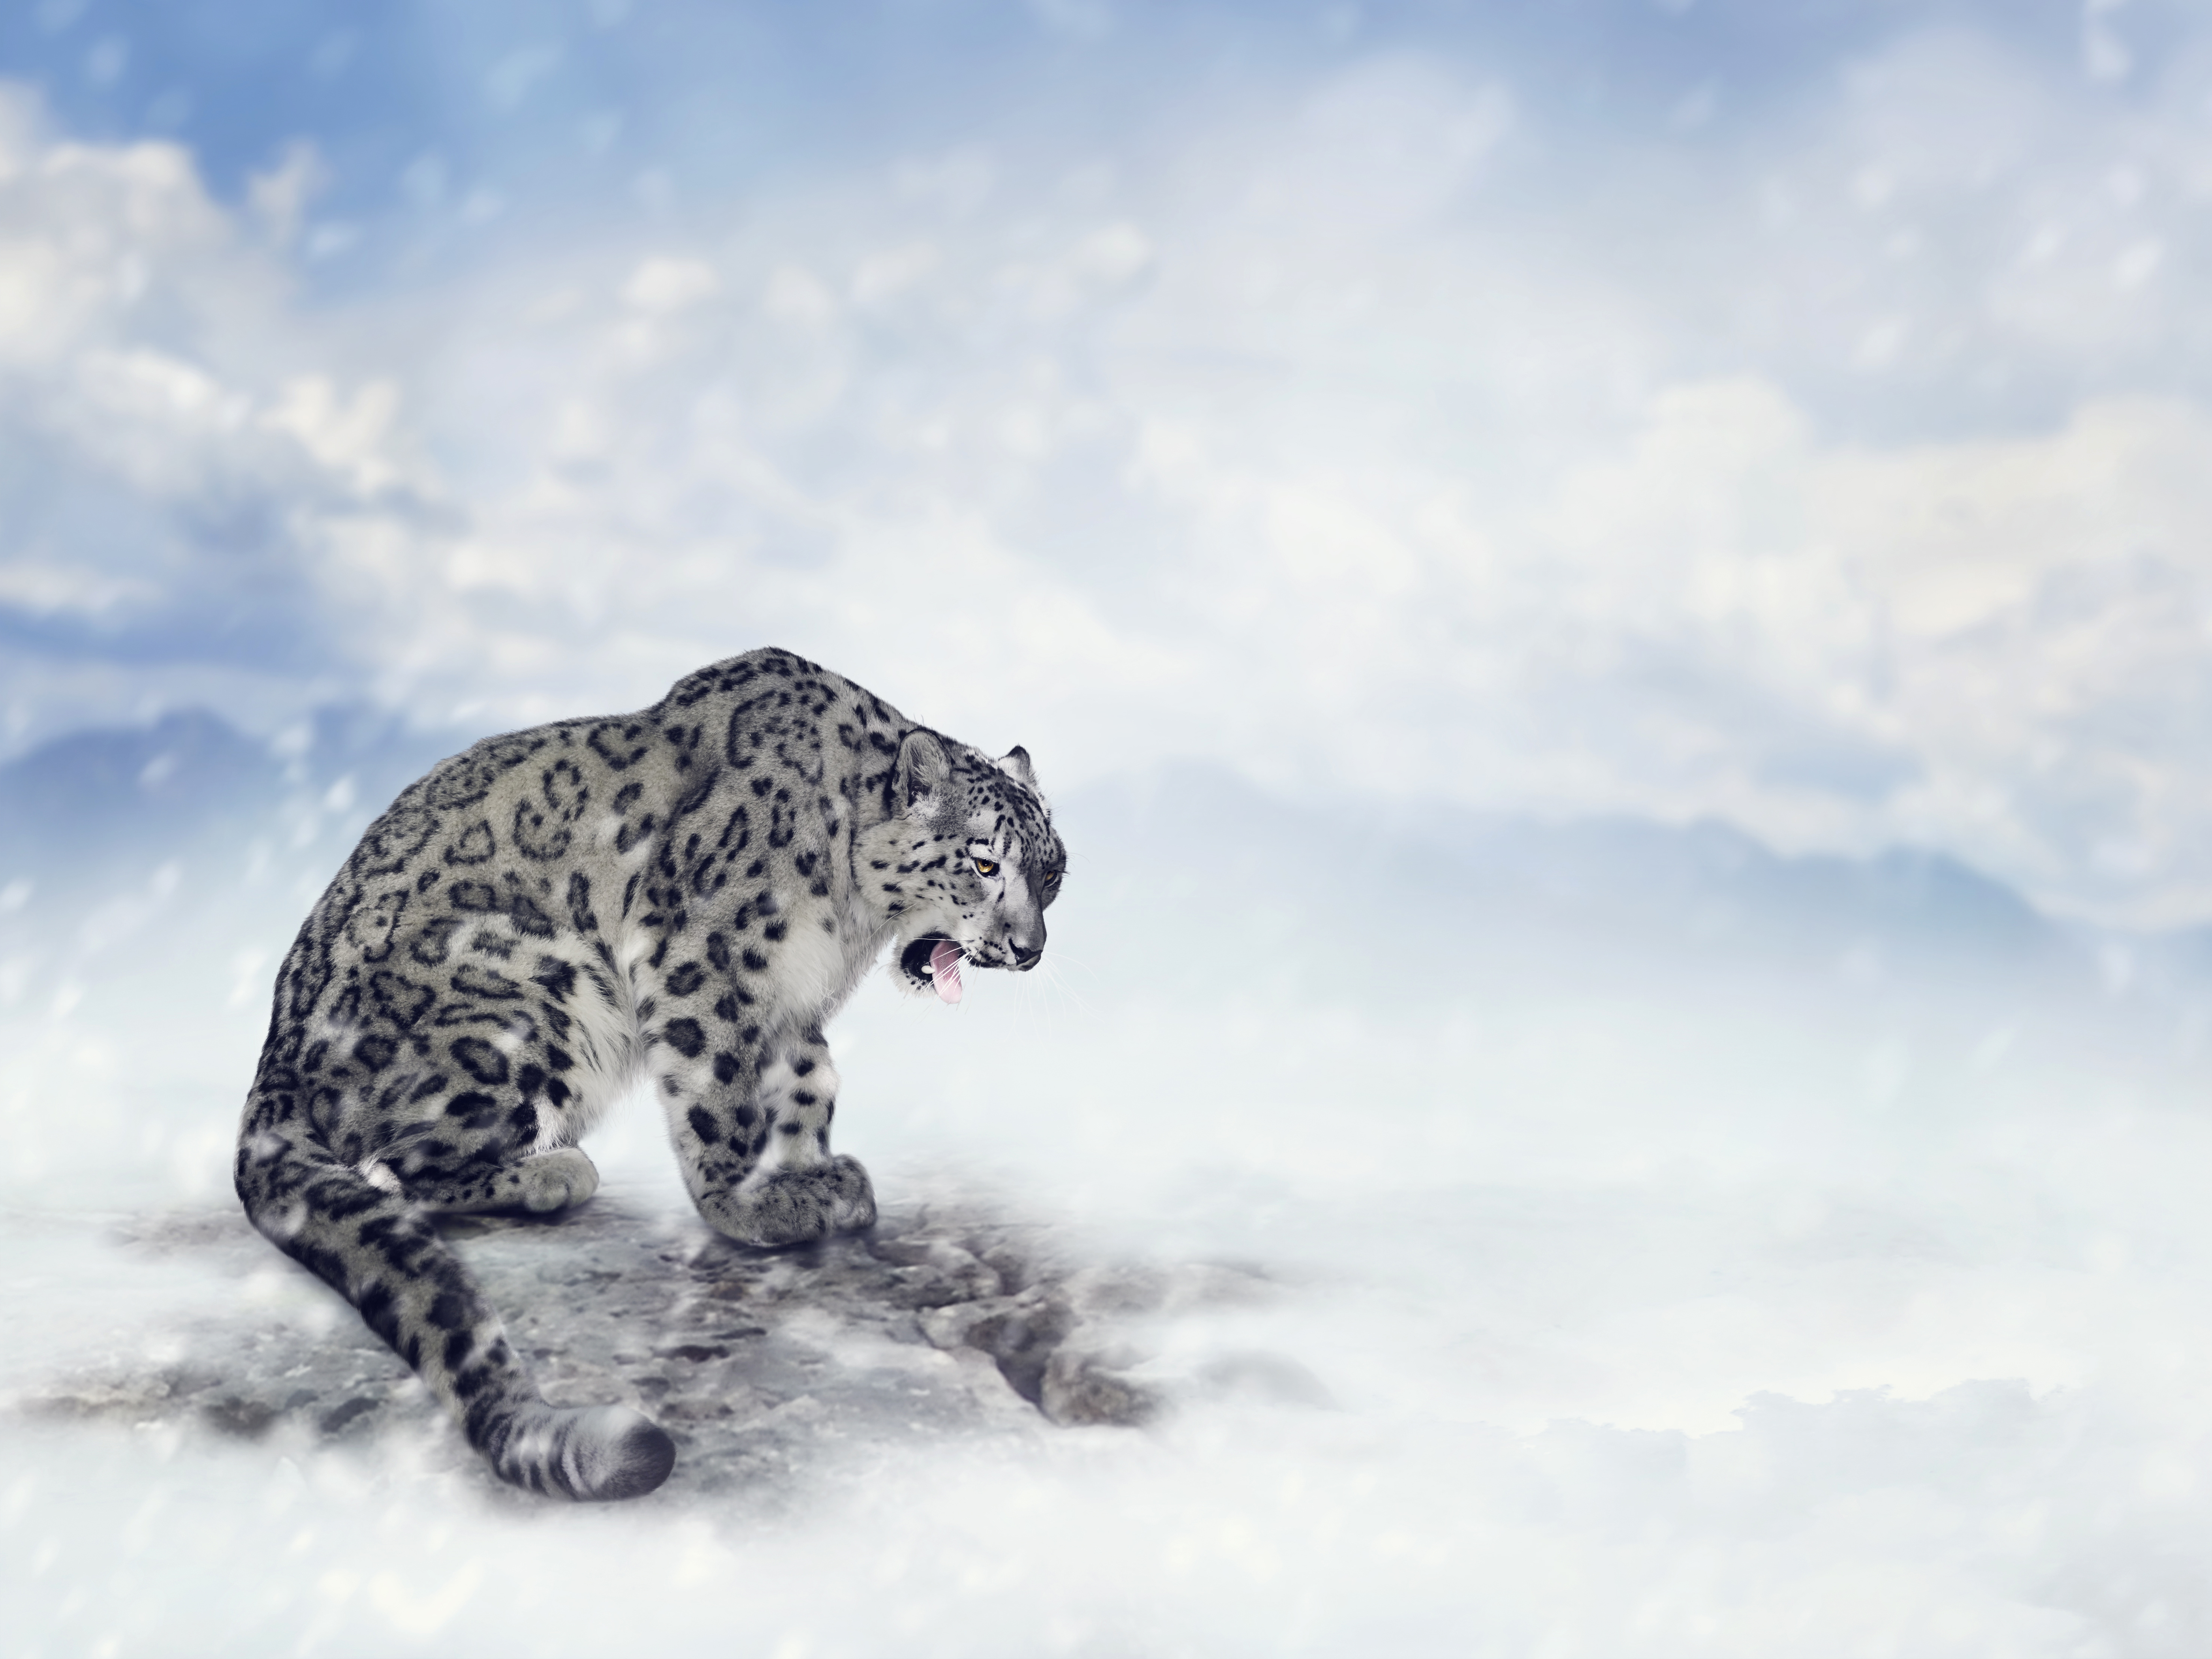 Big Cat Snow Leopard Snowfall Wildlife Predator Animal 5600x4200